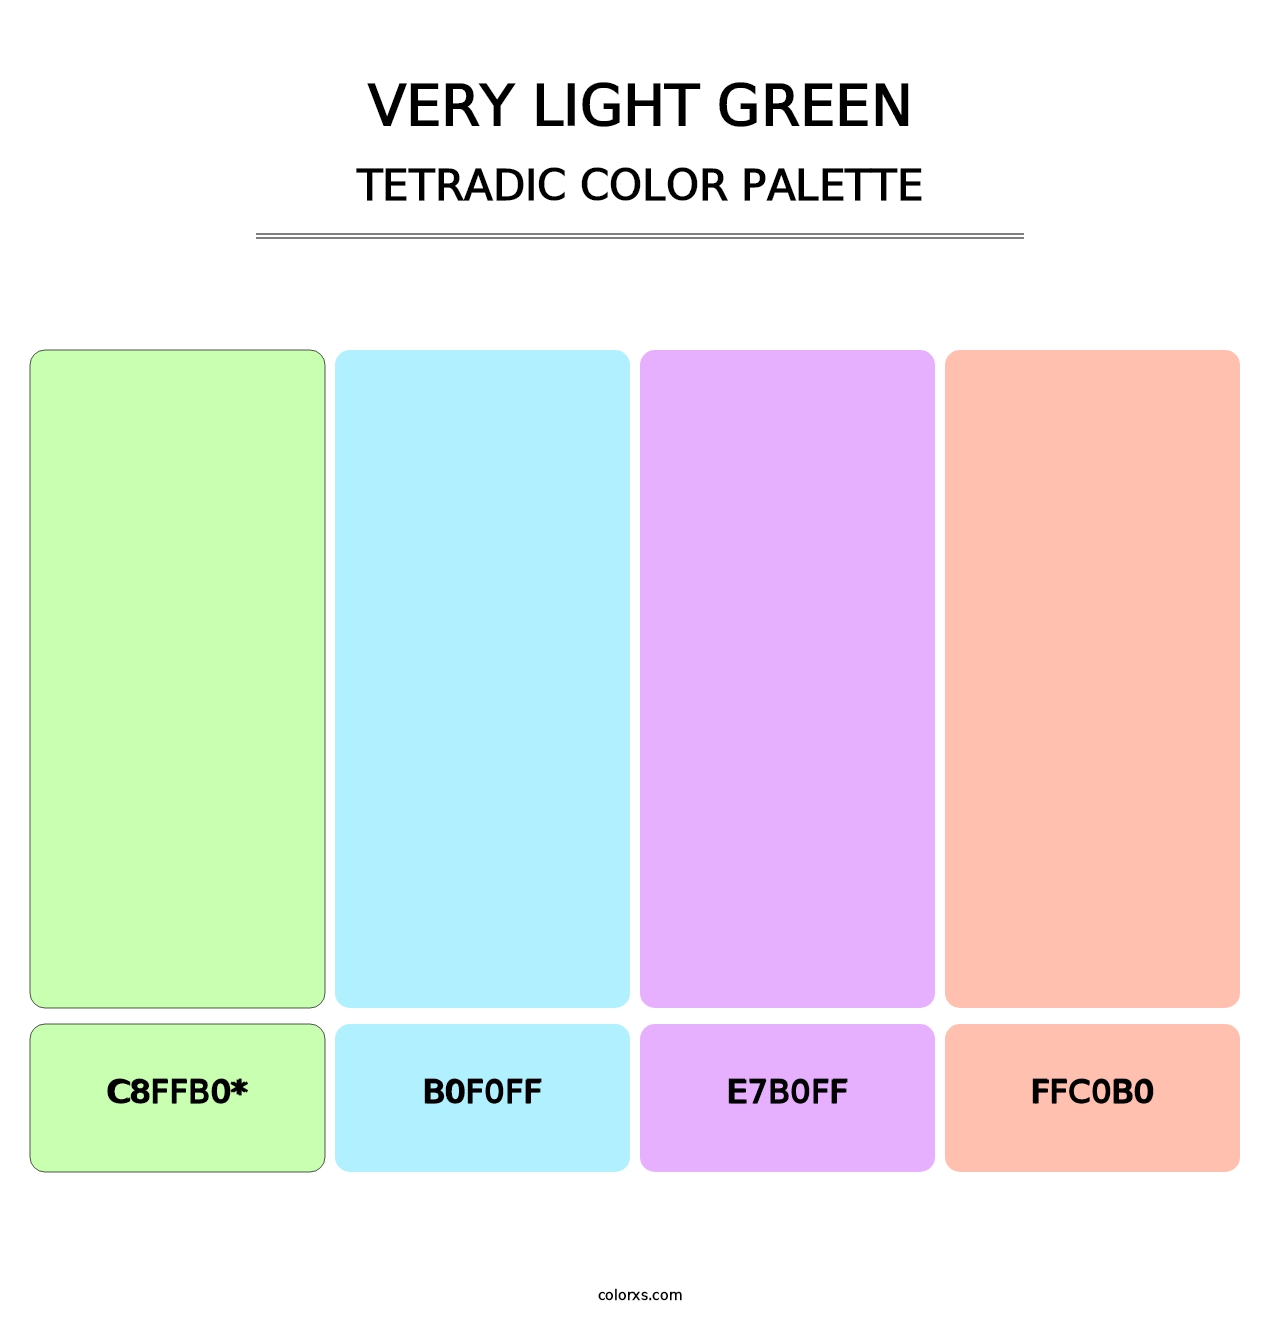 Very Light Green - Tetradic Color Palette